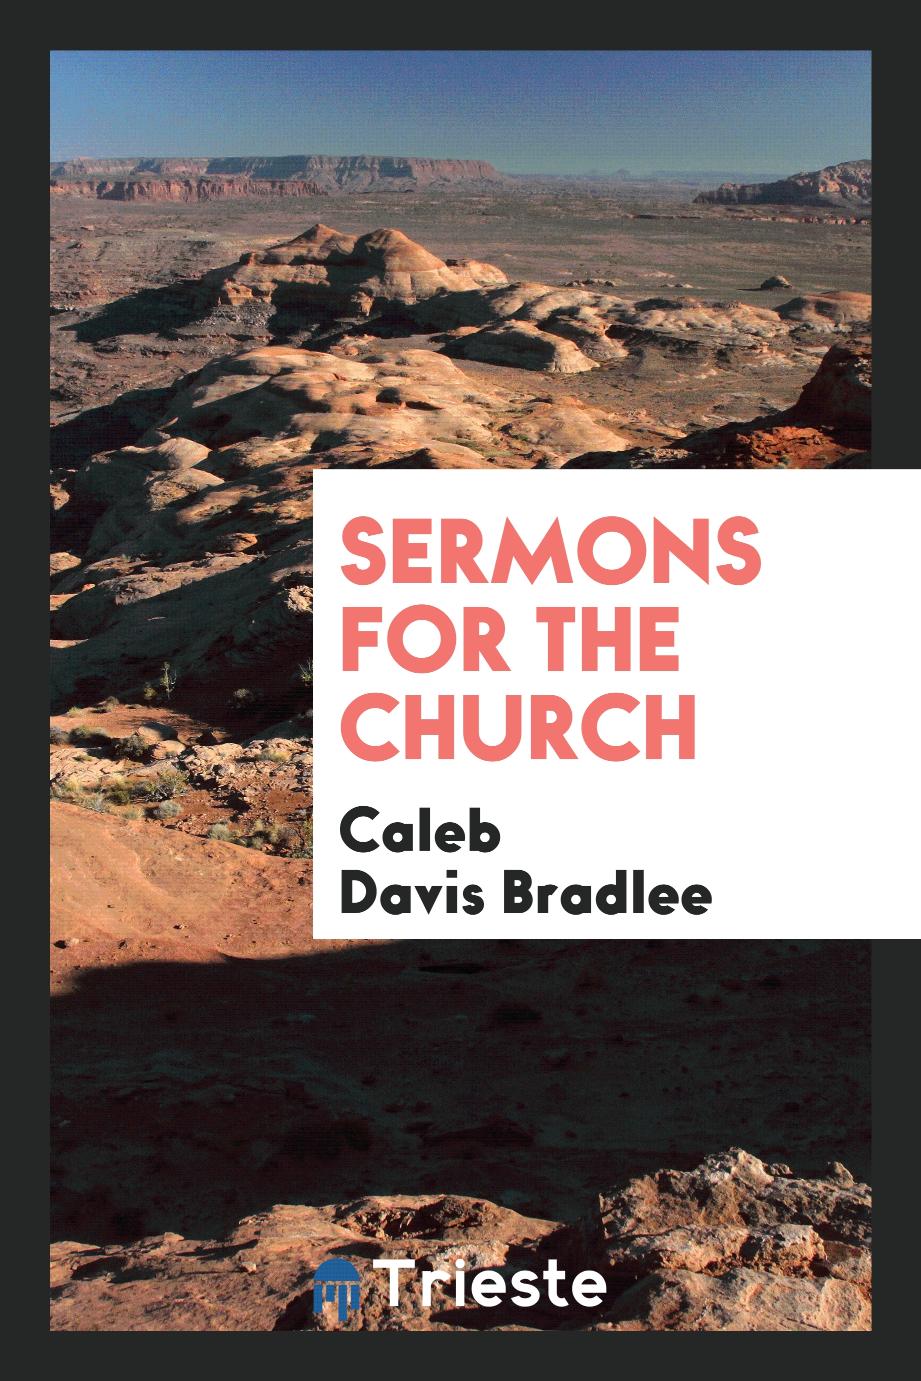 Sermons for the church